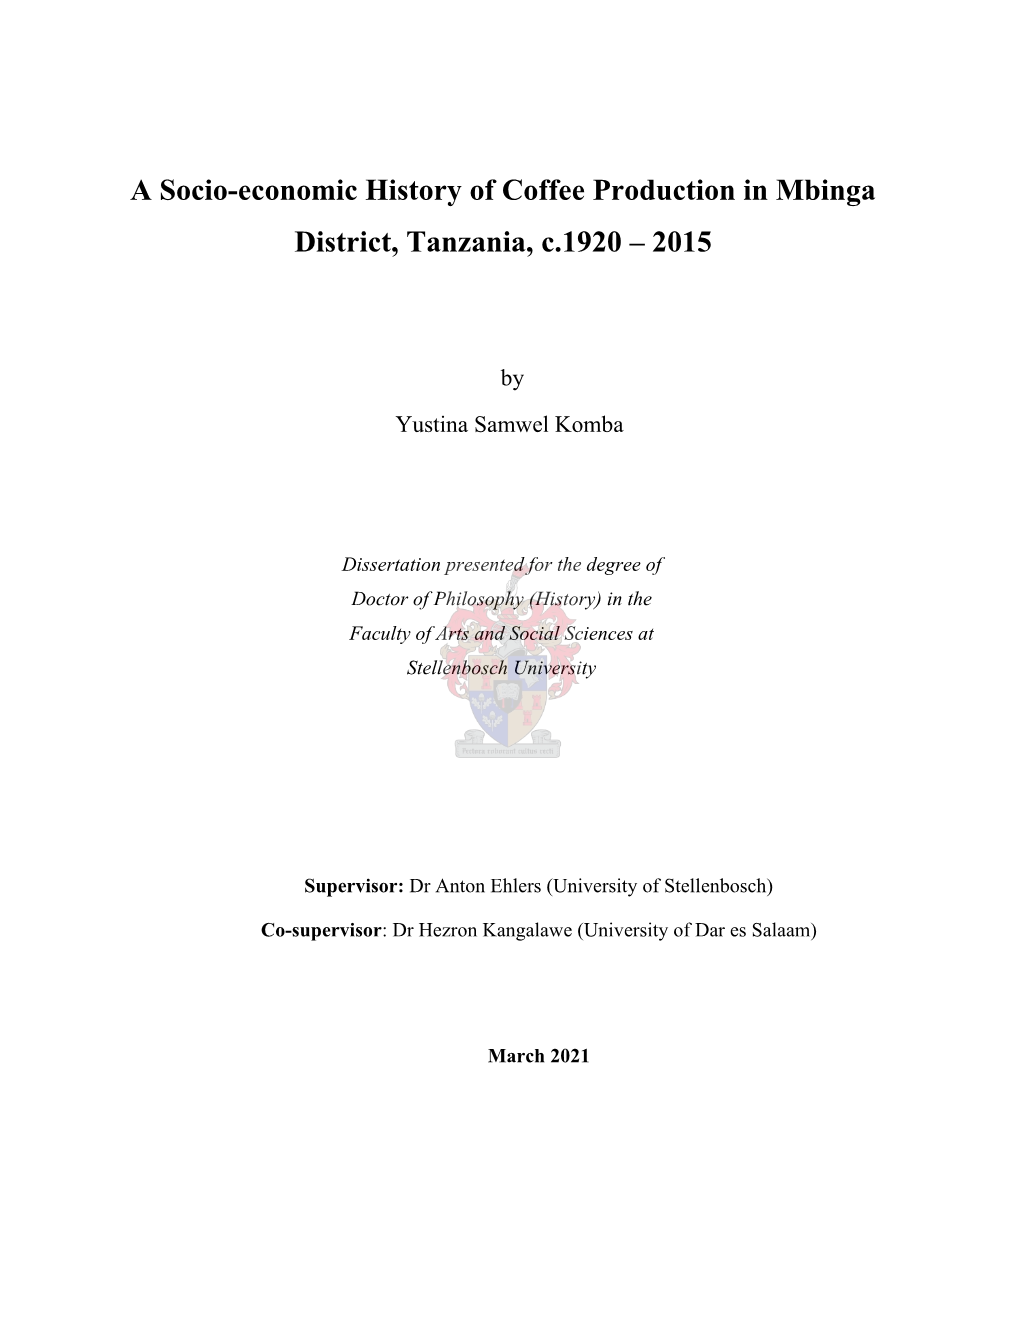 A Socio-Economic History of Coffee Production in Mbinga District, Tanzania, C.1920 – 2015